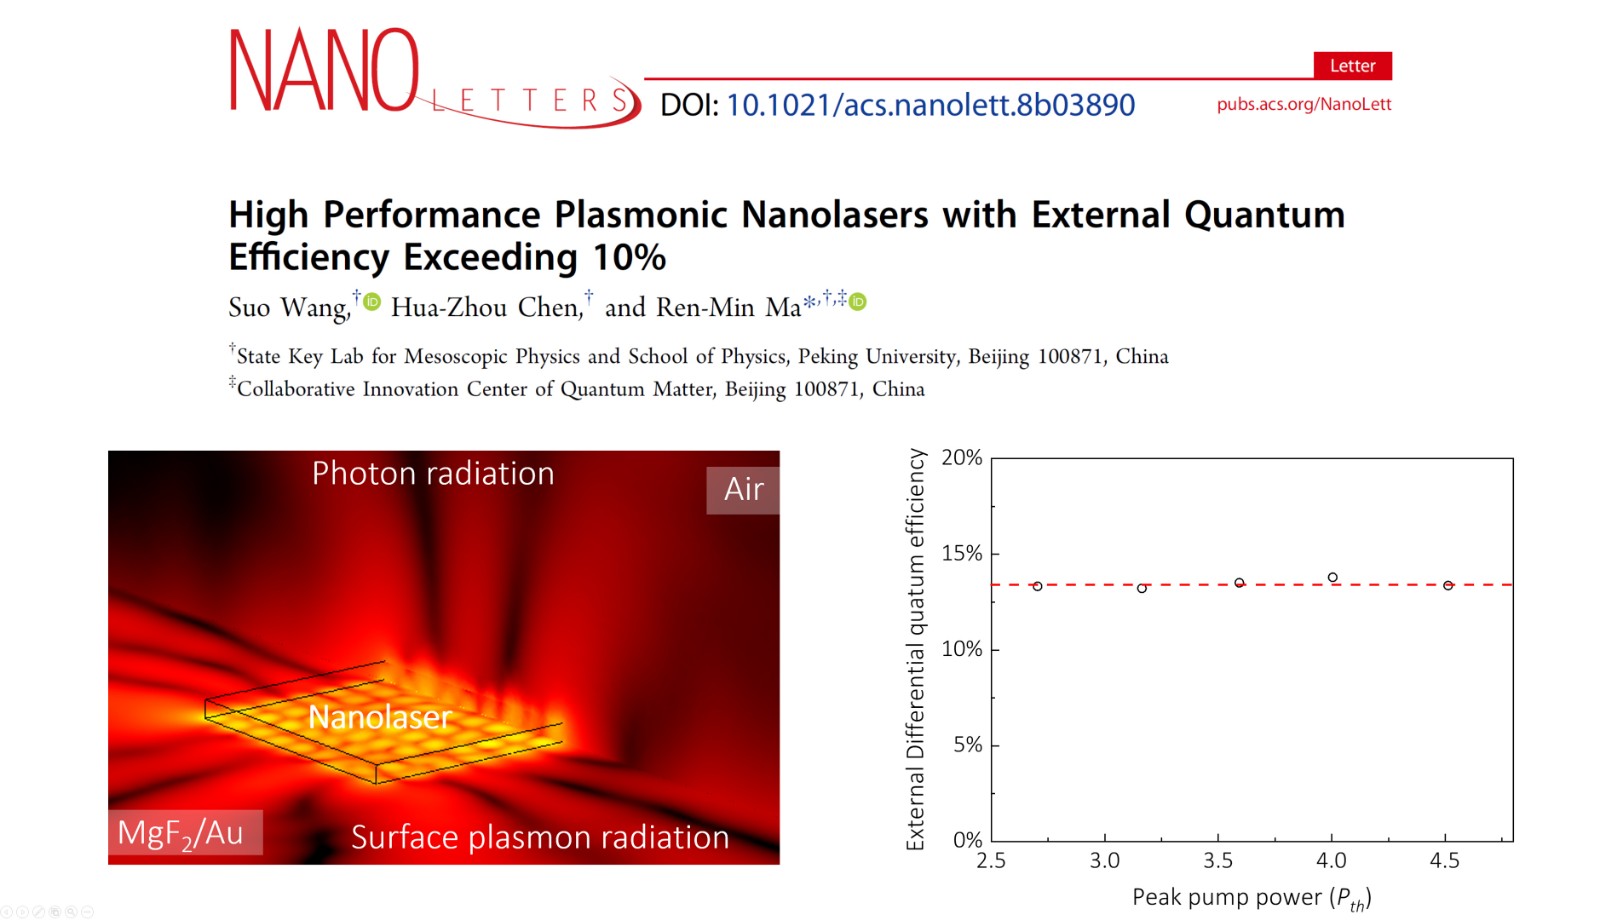 High Performance Plasmonic Nanolasers with External Quantum Efficiency Exceeding 10%